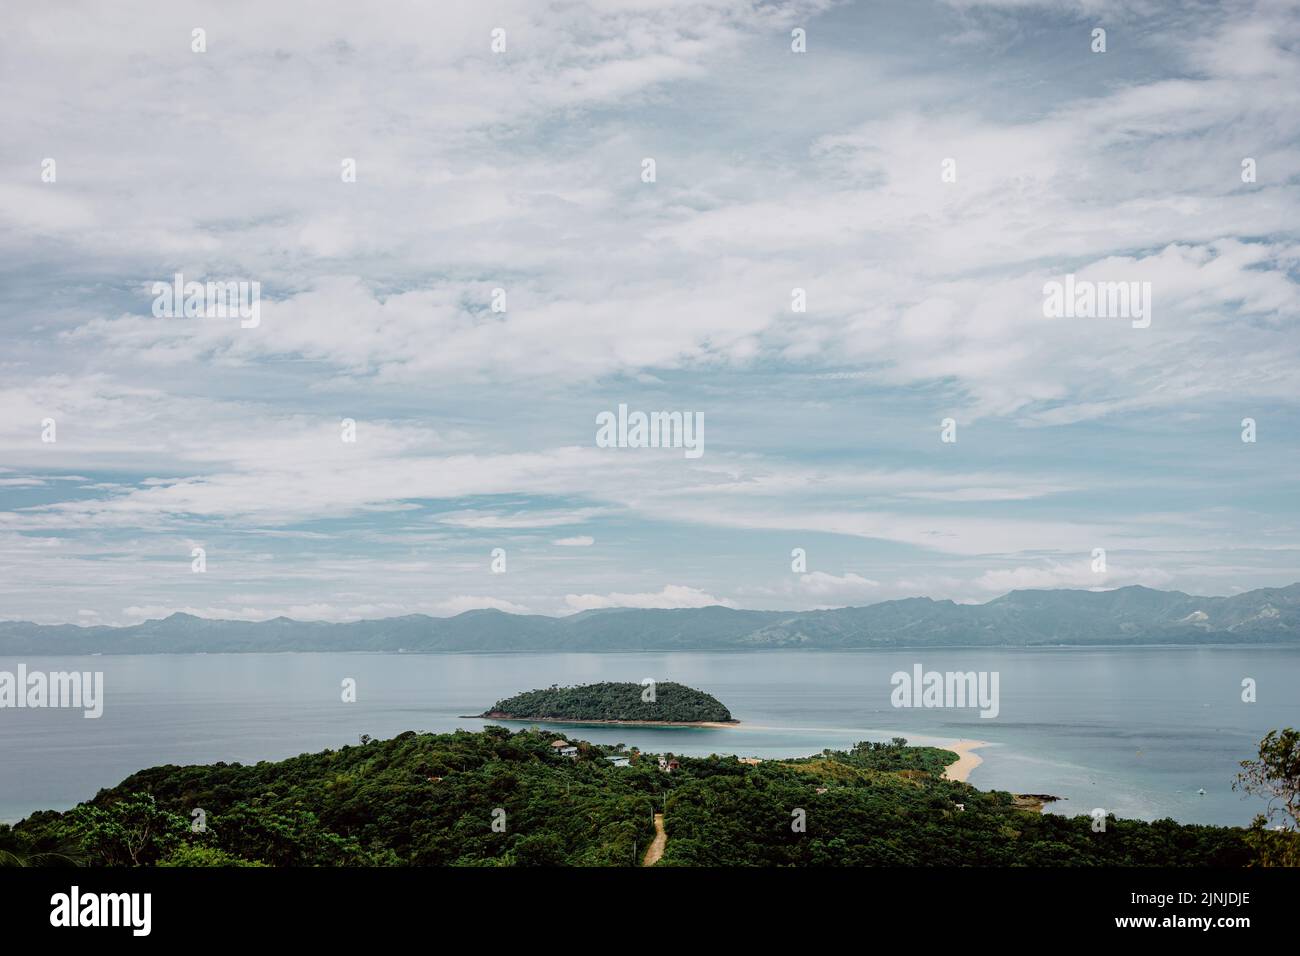 The beautiful view of the green island and sea. Bon Bon Beach, Romblon, Philippines. Stock Photo